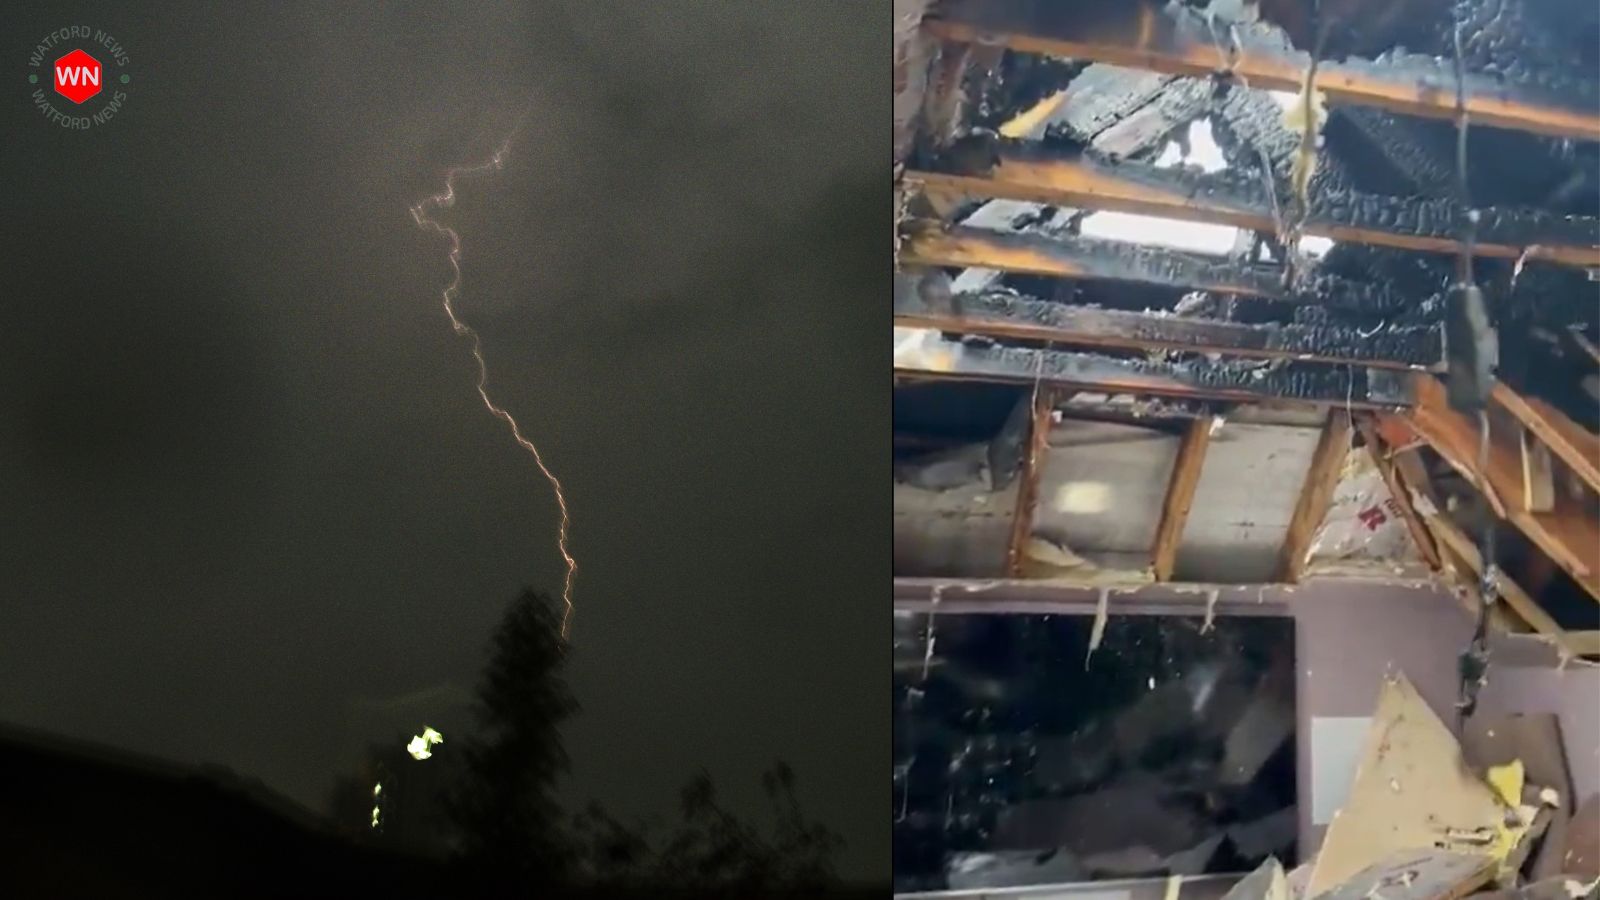 Lightning strikes house in Watford video shows damage inside